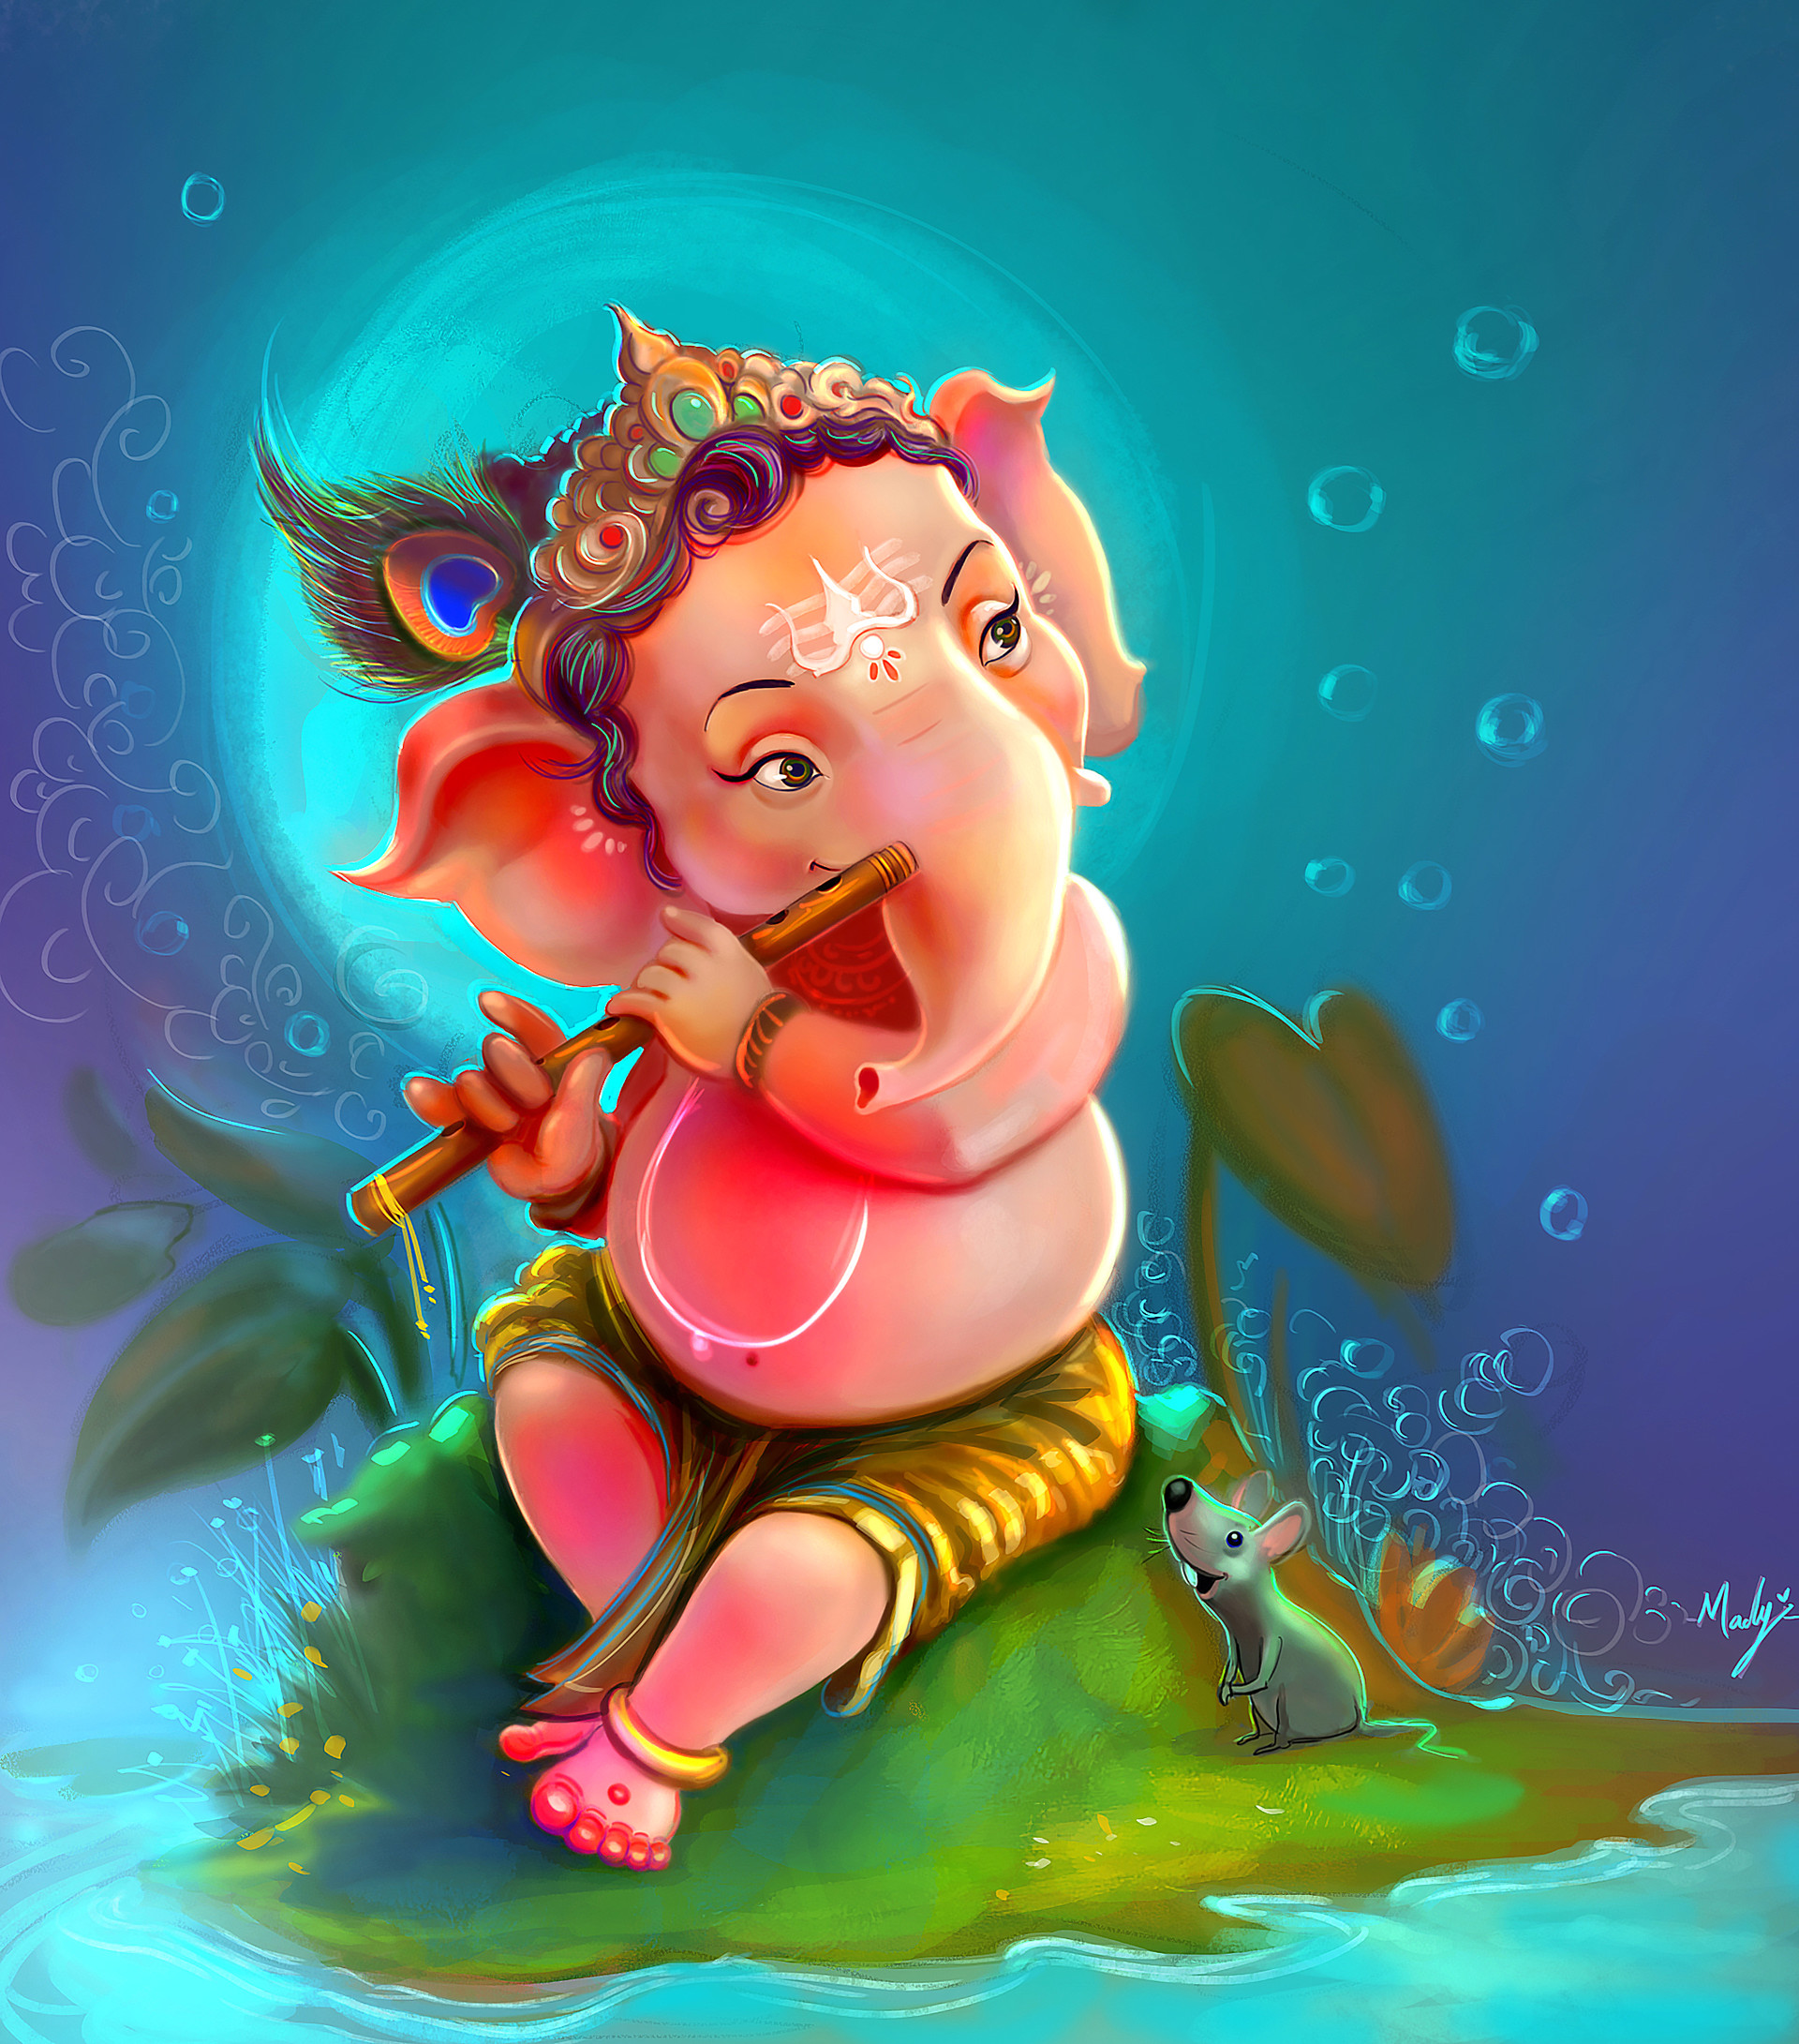 Madhaw Bauri - Lord Ganesha & happy ganesh chaturthi...